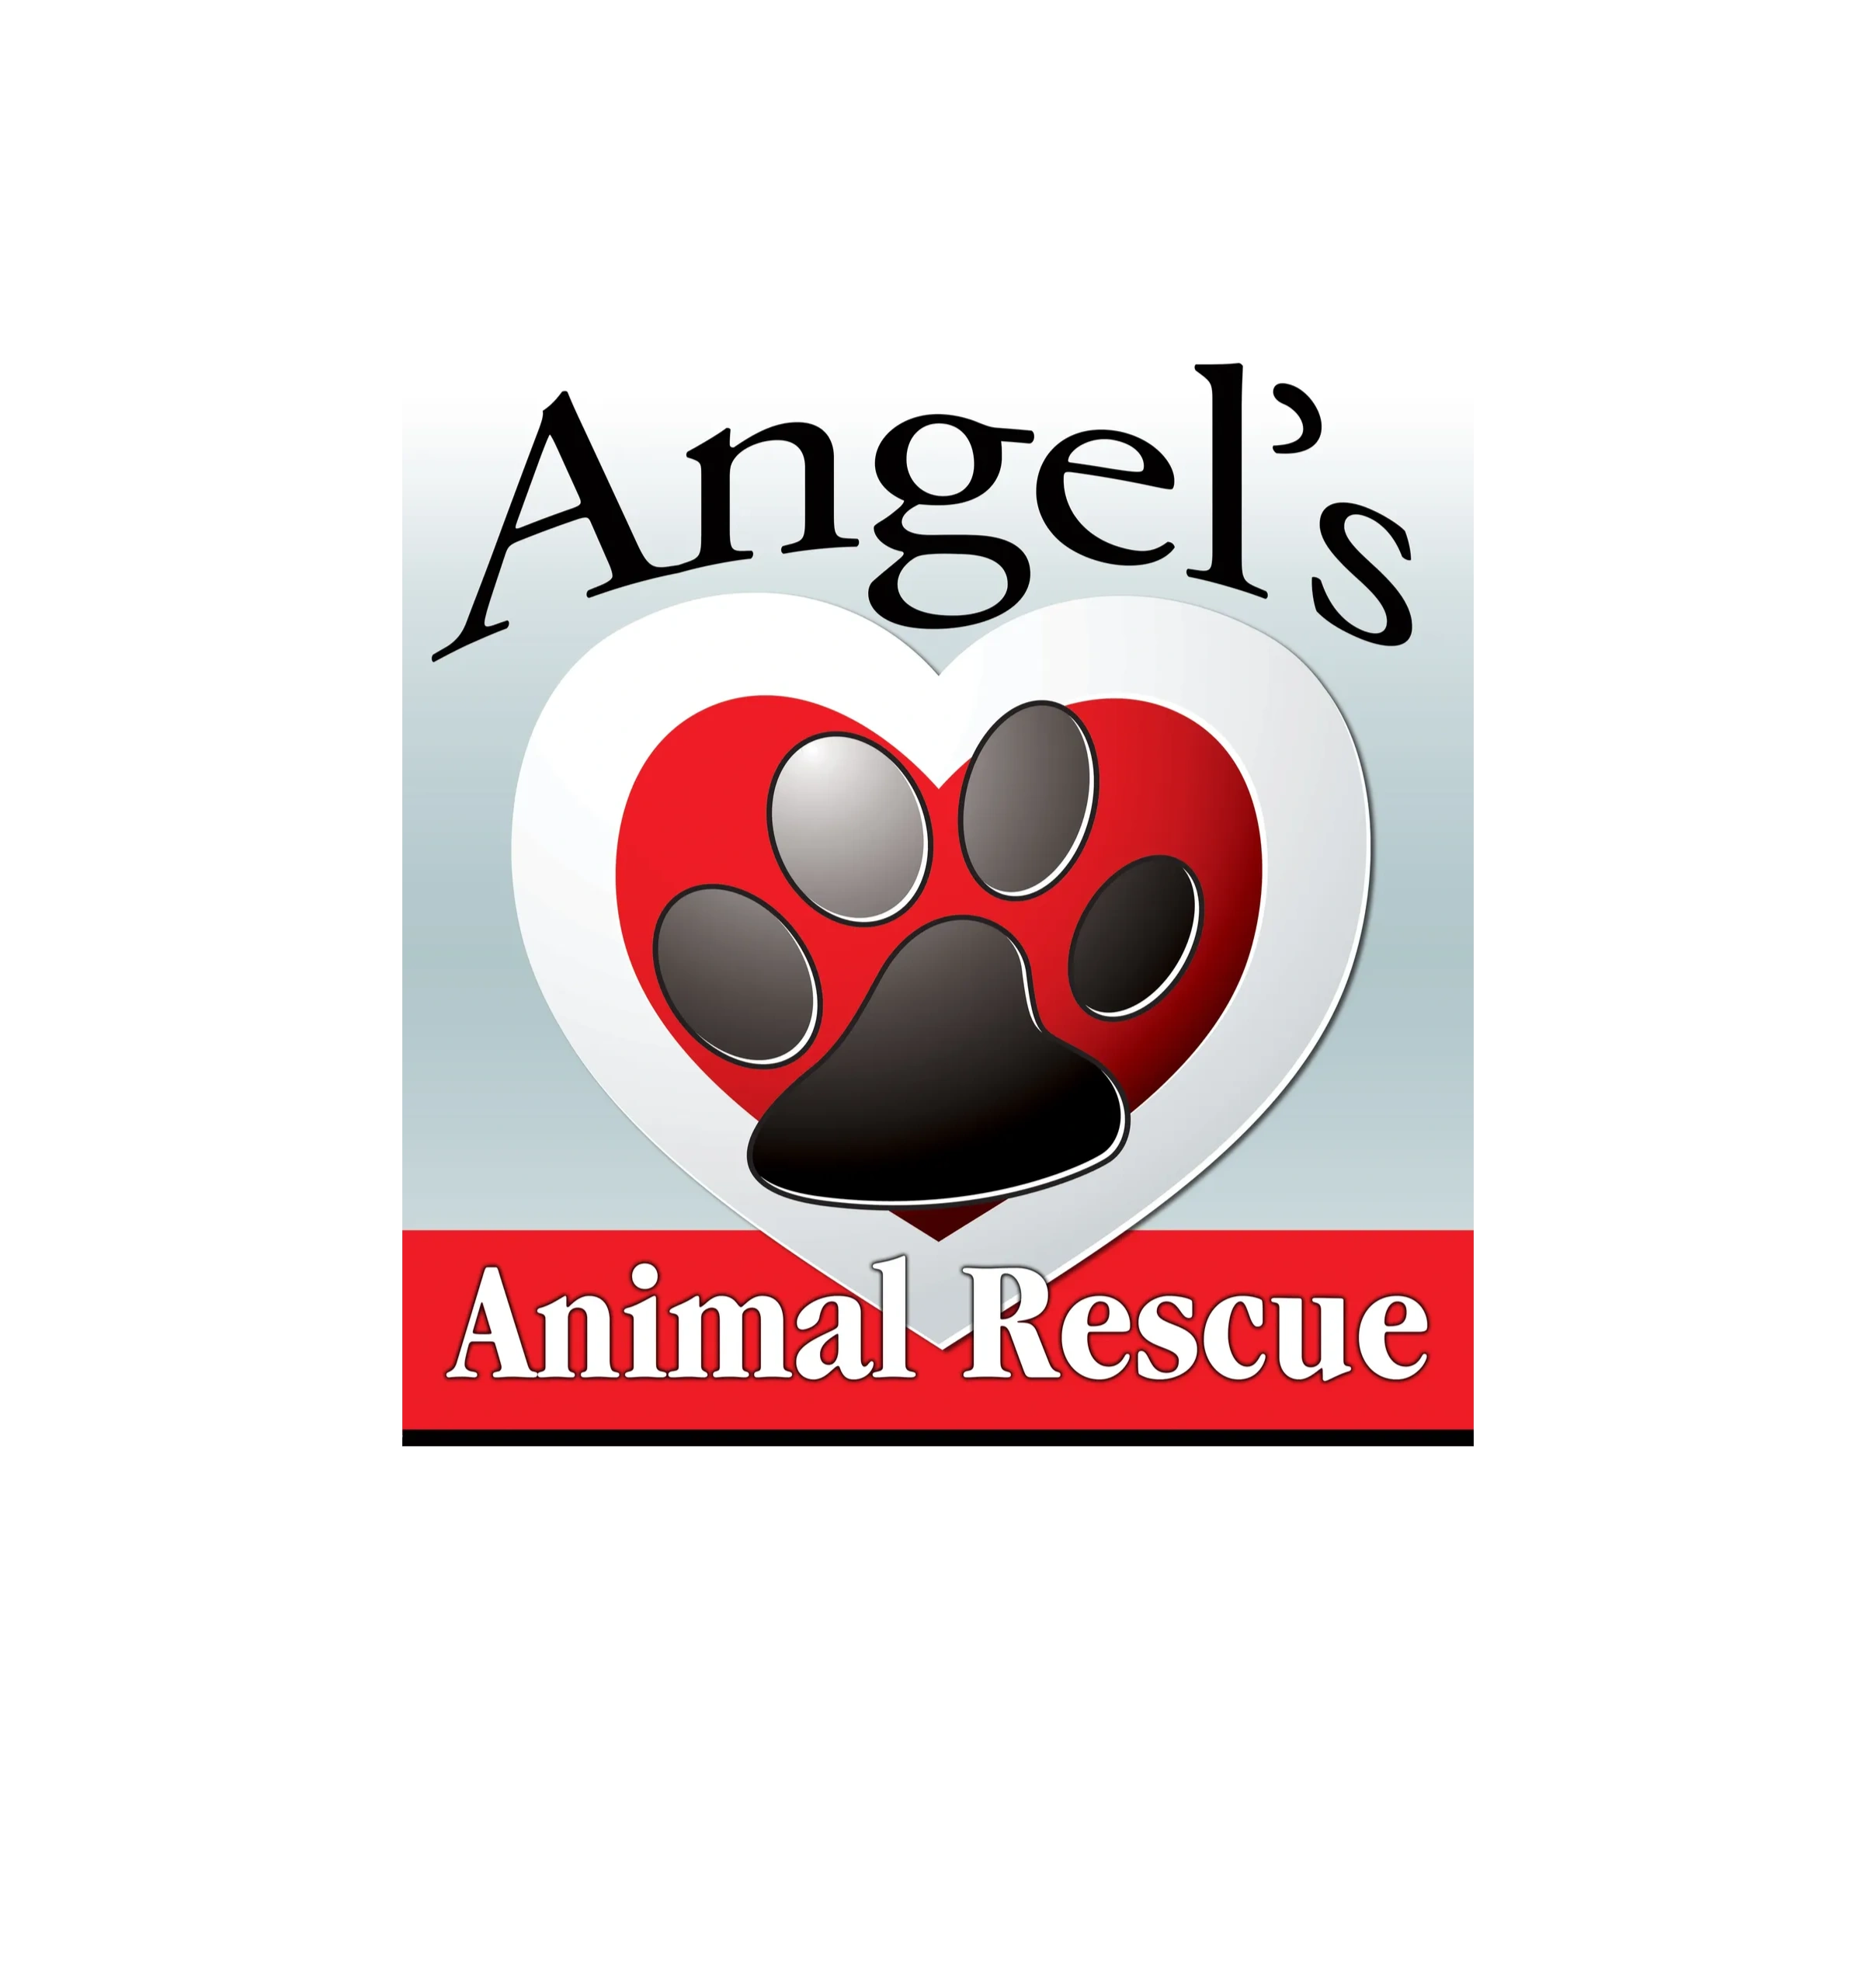 Angel's Animal Rescue Society